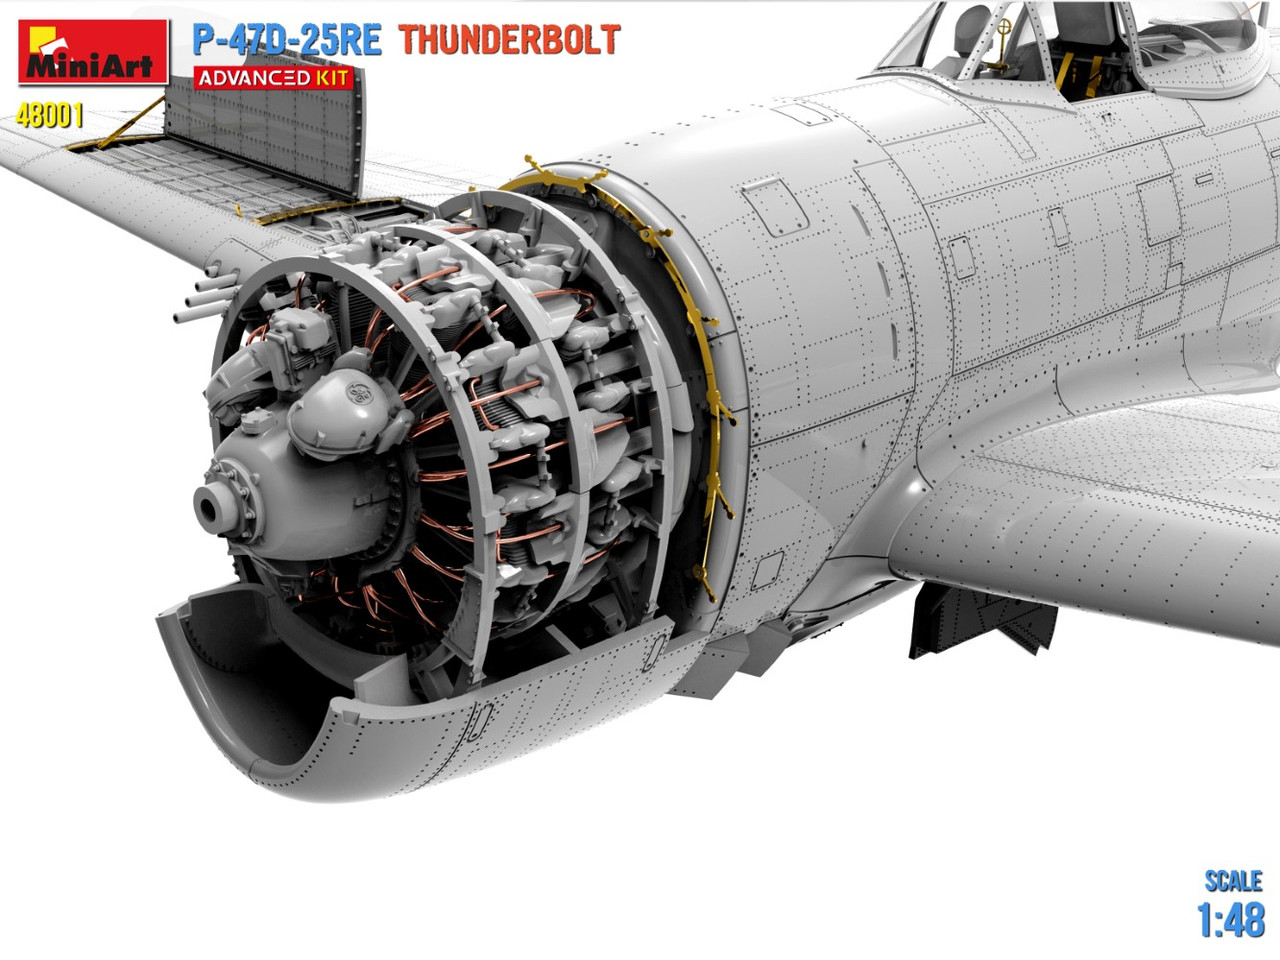 1/48 P-47D-25RE Tunderbolt (Advance kit) - MIA48001